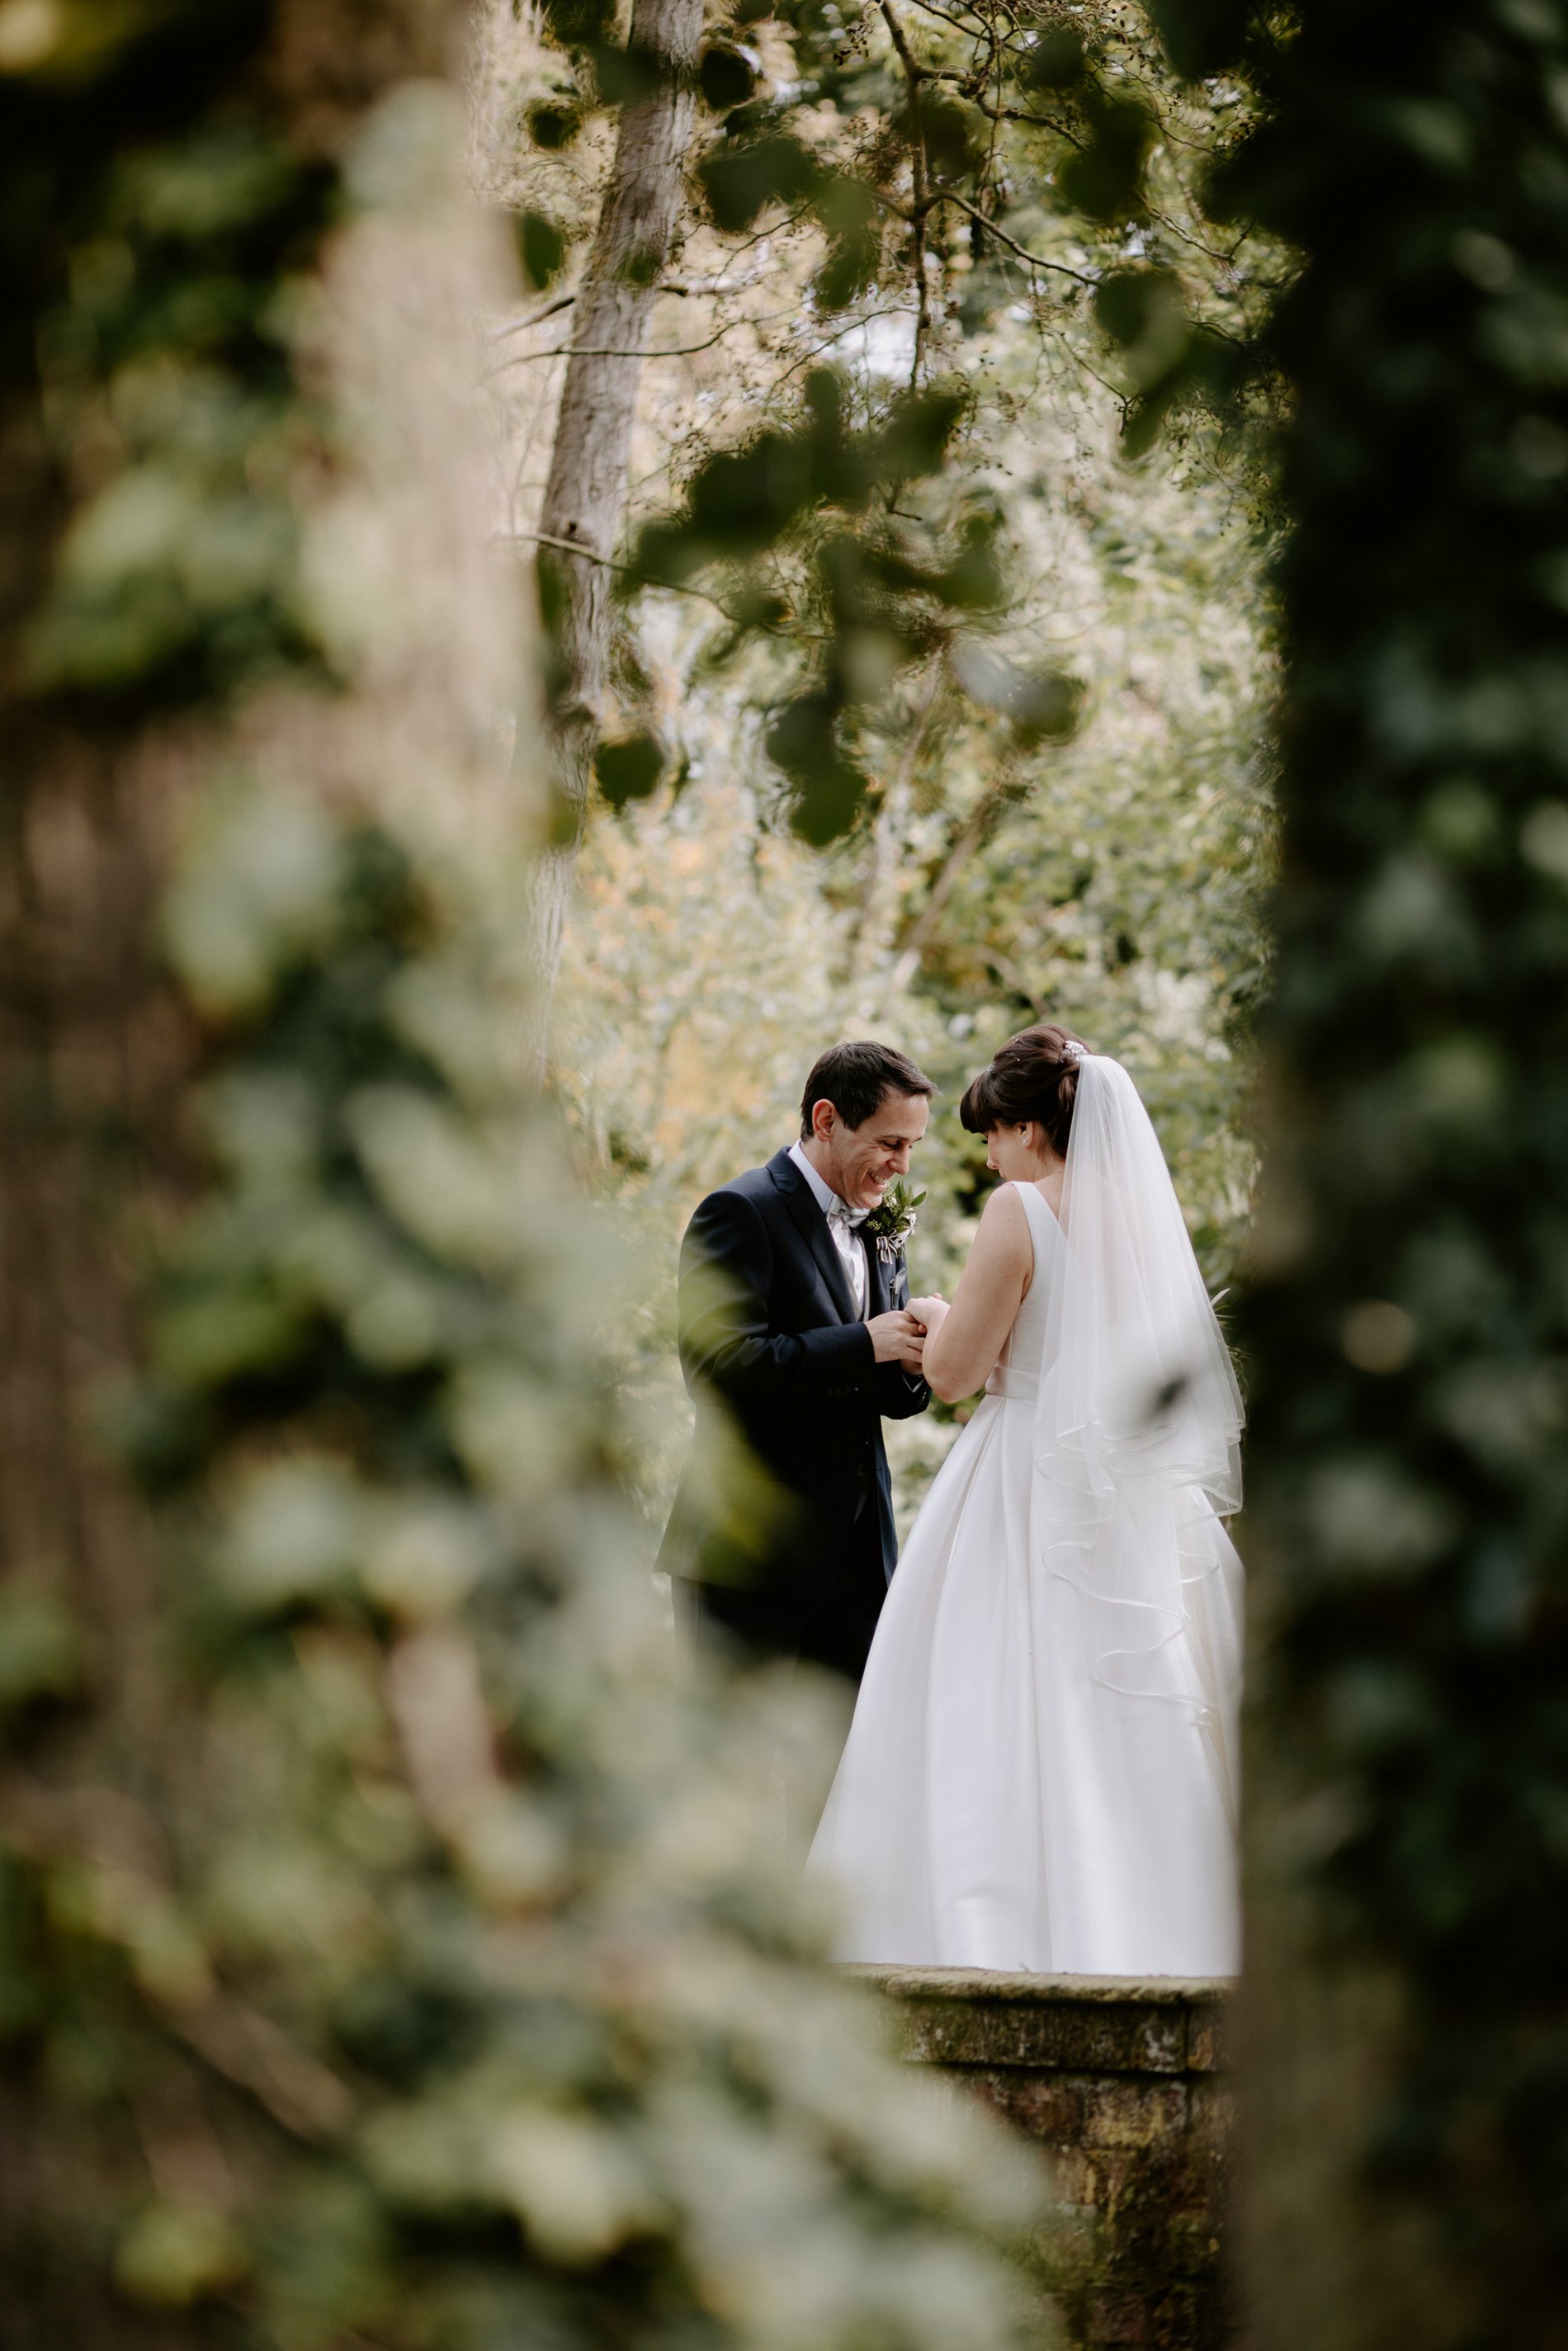 An Elegant White Wedding at Thicket Priory (c) Carla Whittingham Photography (61)